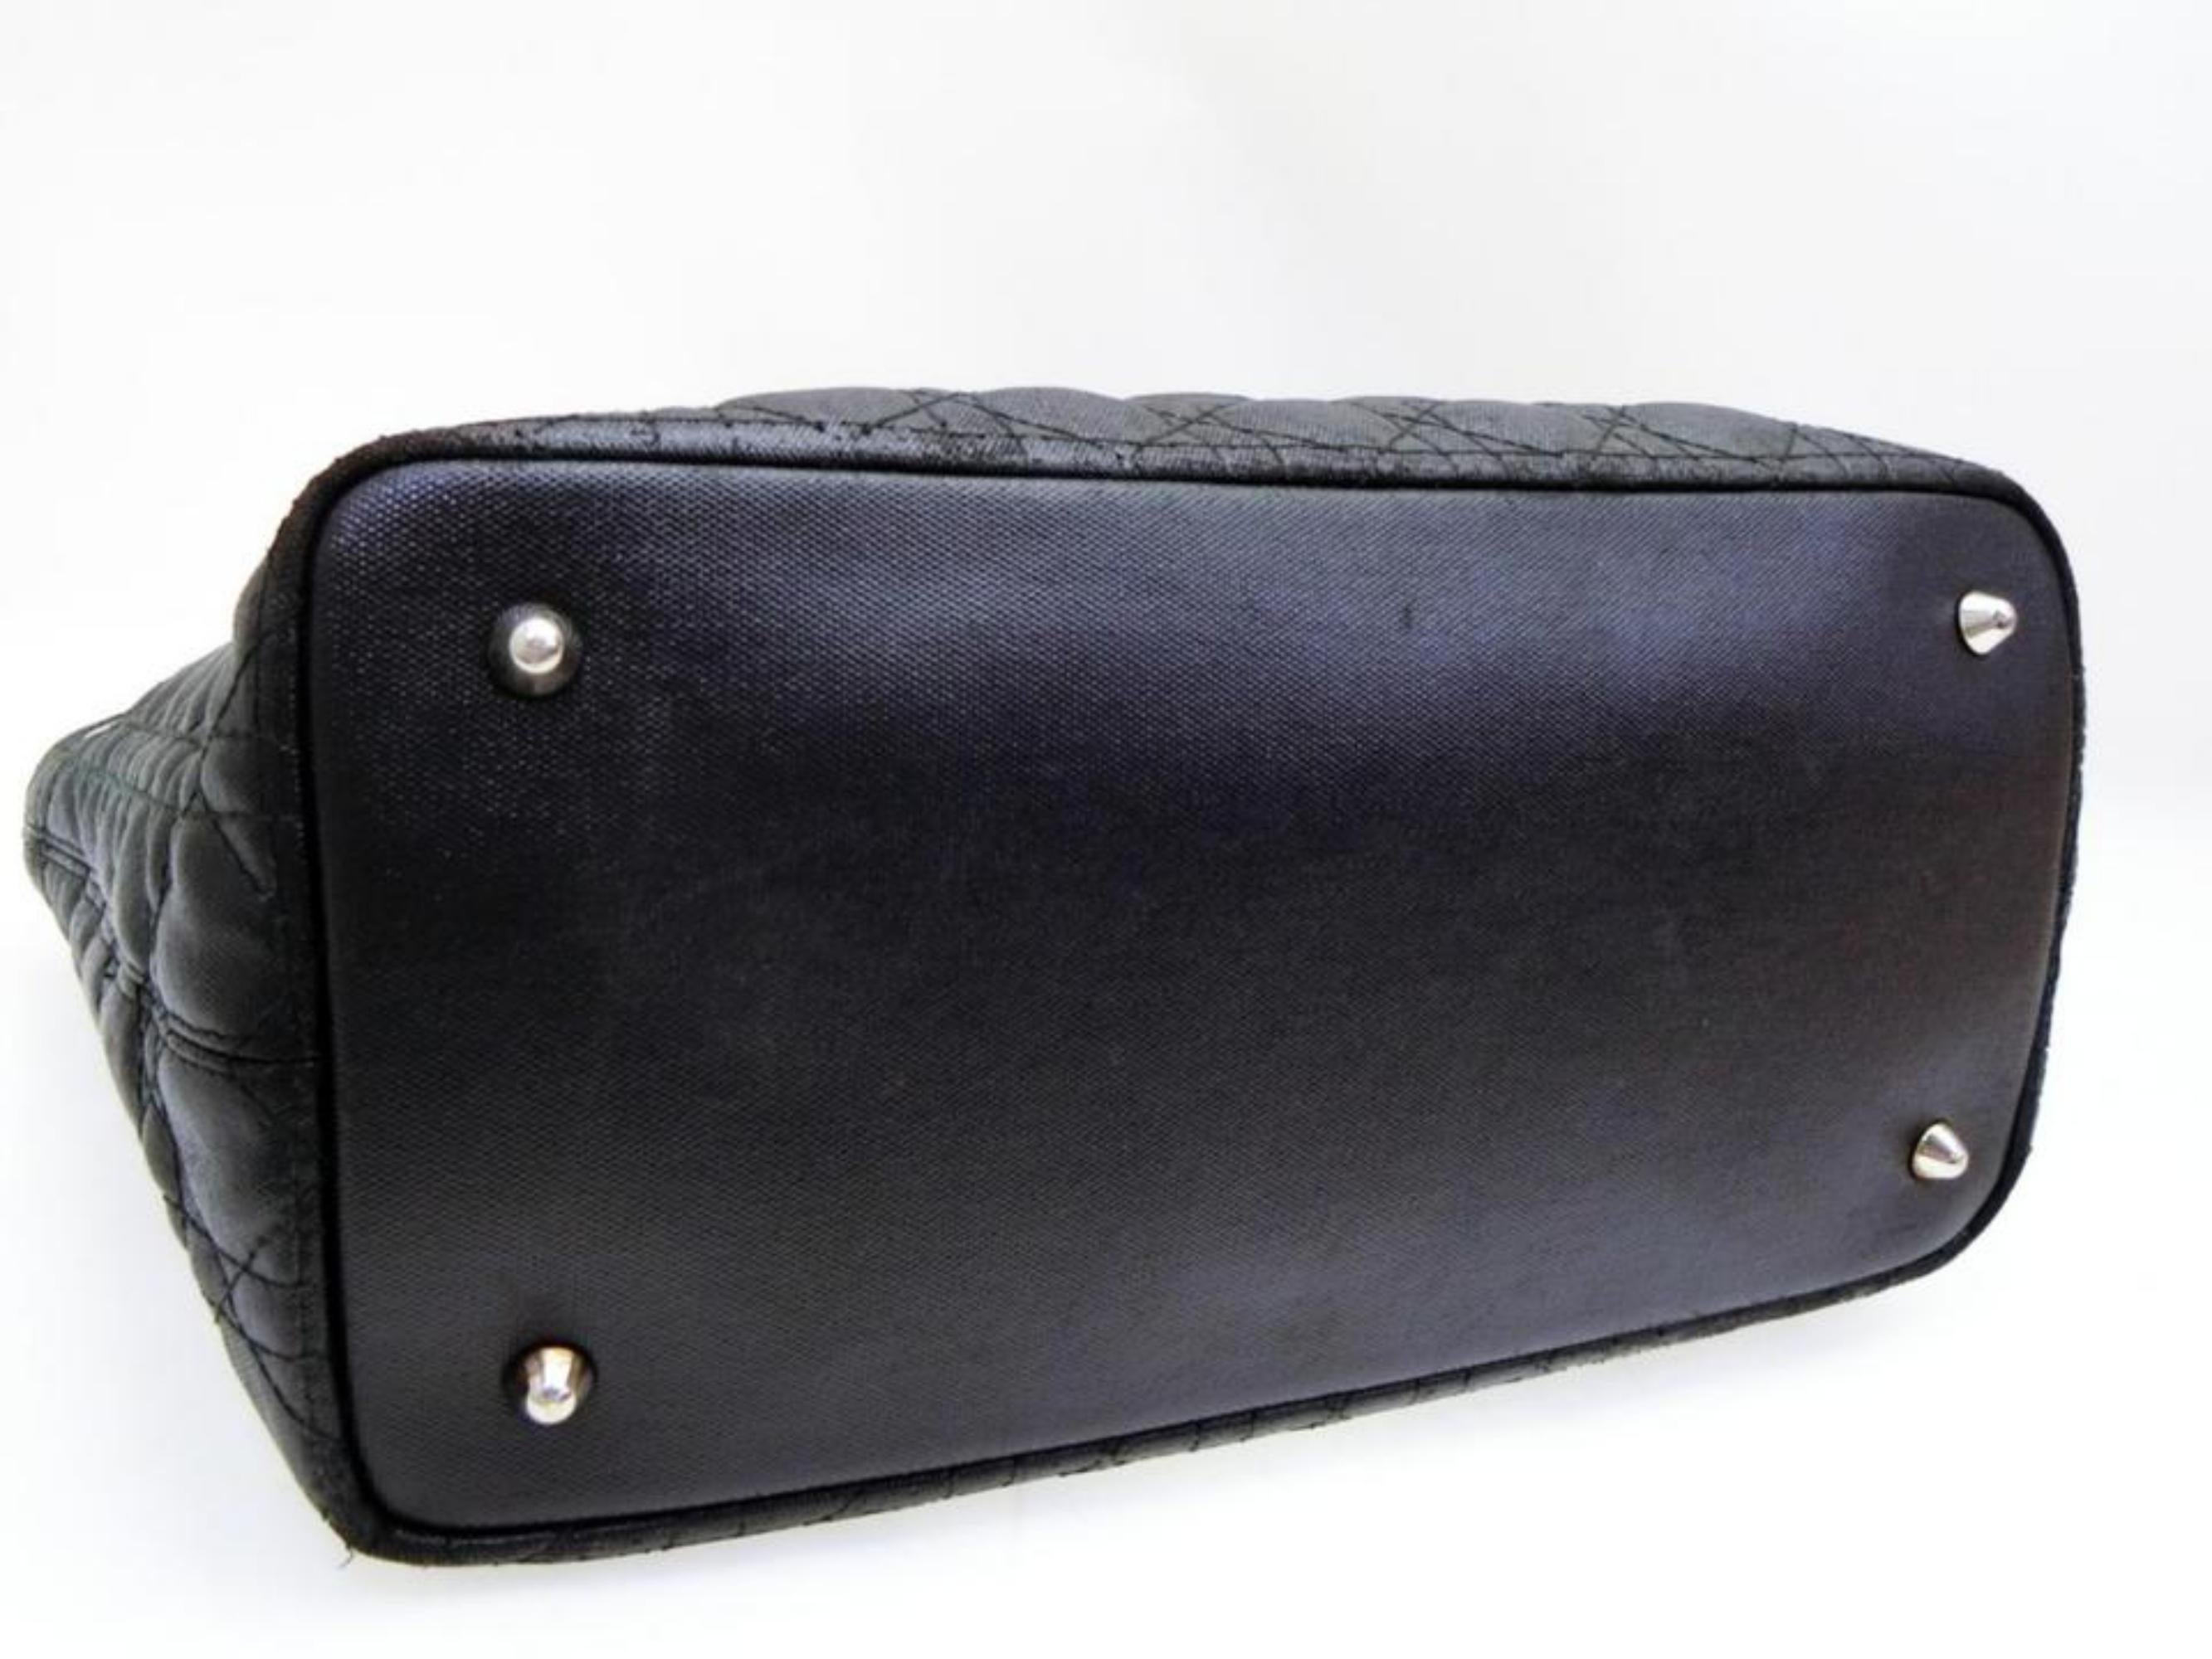 Dior Quilted Leather Cannage Shopper Tote 233793 Black Canvas Shoulder Bag For Sale 4